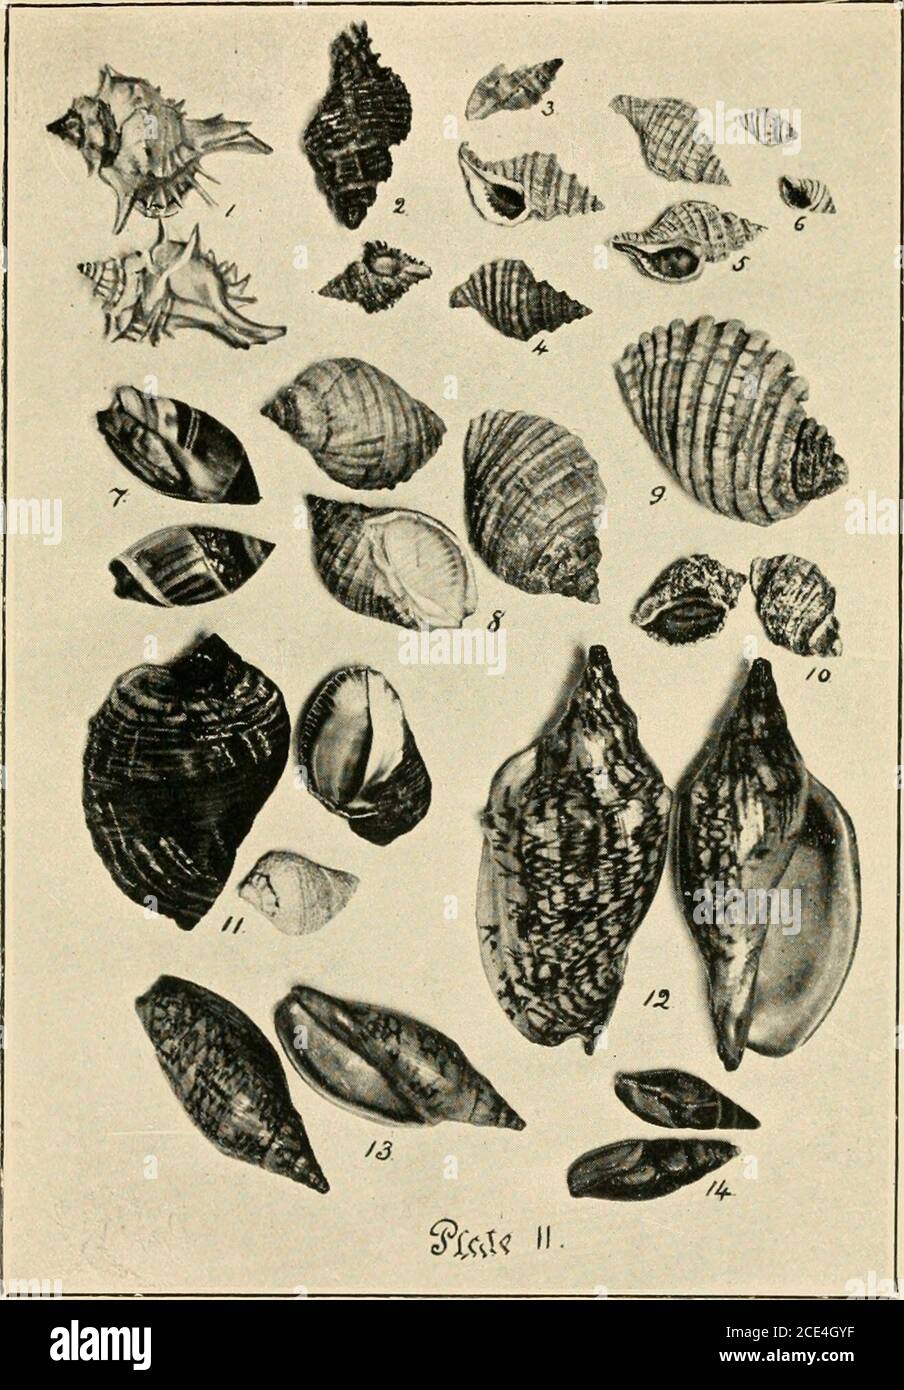 . Beautiful shells of New Zealand : an illustrated work for amateur collectors of New Zealand marine shells, with directions for collecting and cleaning them . Argonauta nodosaBpirula peroni Page ... 14... 15 PLATE II,. 1—Murex zelandicus2—Murex octogonus 3—Murex eos A—Trophon stangeri5—Trophon ambiguus6—Trophon cheesemani7—Ancilla australis Page 15161616161717 8 and 9—Purpura suceincta10—Purpura scobina11—Purpura haustrum12—Scaphella pacifica13—Scaphella gracilis14—Mitra melaniana Page 17 17, 17. 18 18, 18 PLATE Ml, Stock Photo